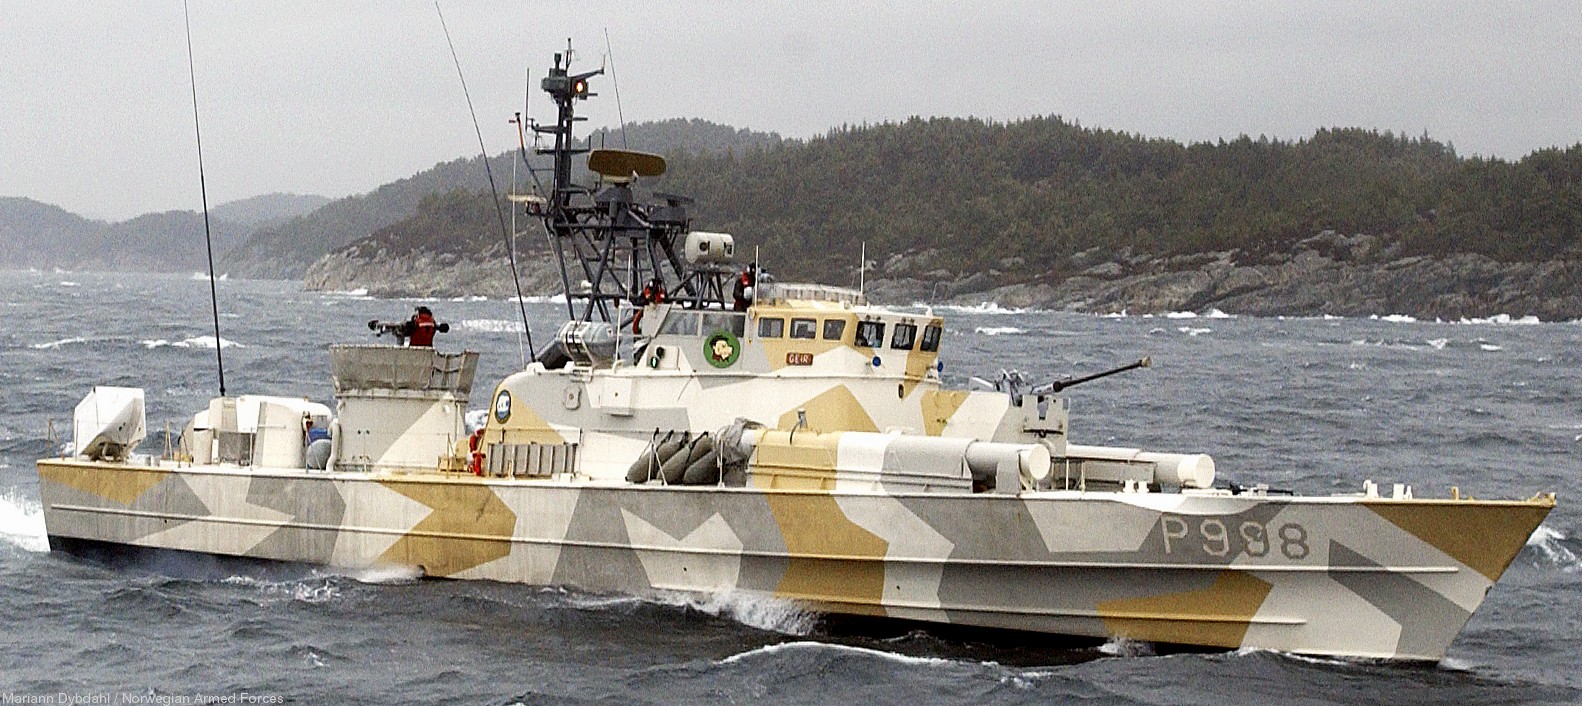 p-998 knm geir hauk class fast attack missile torpedo craft boat norwegian navy sjøforsvaret 07